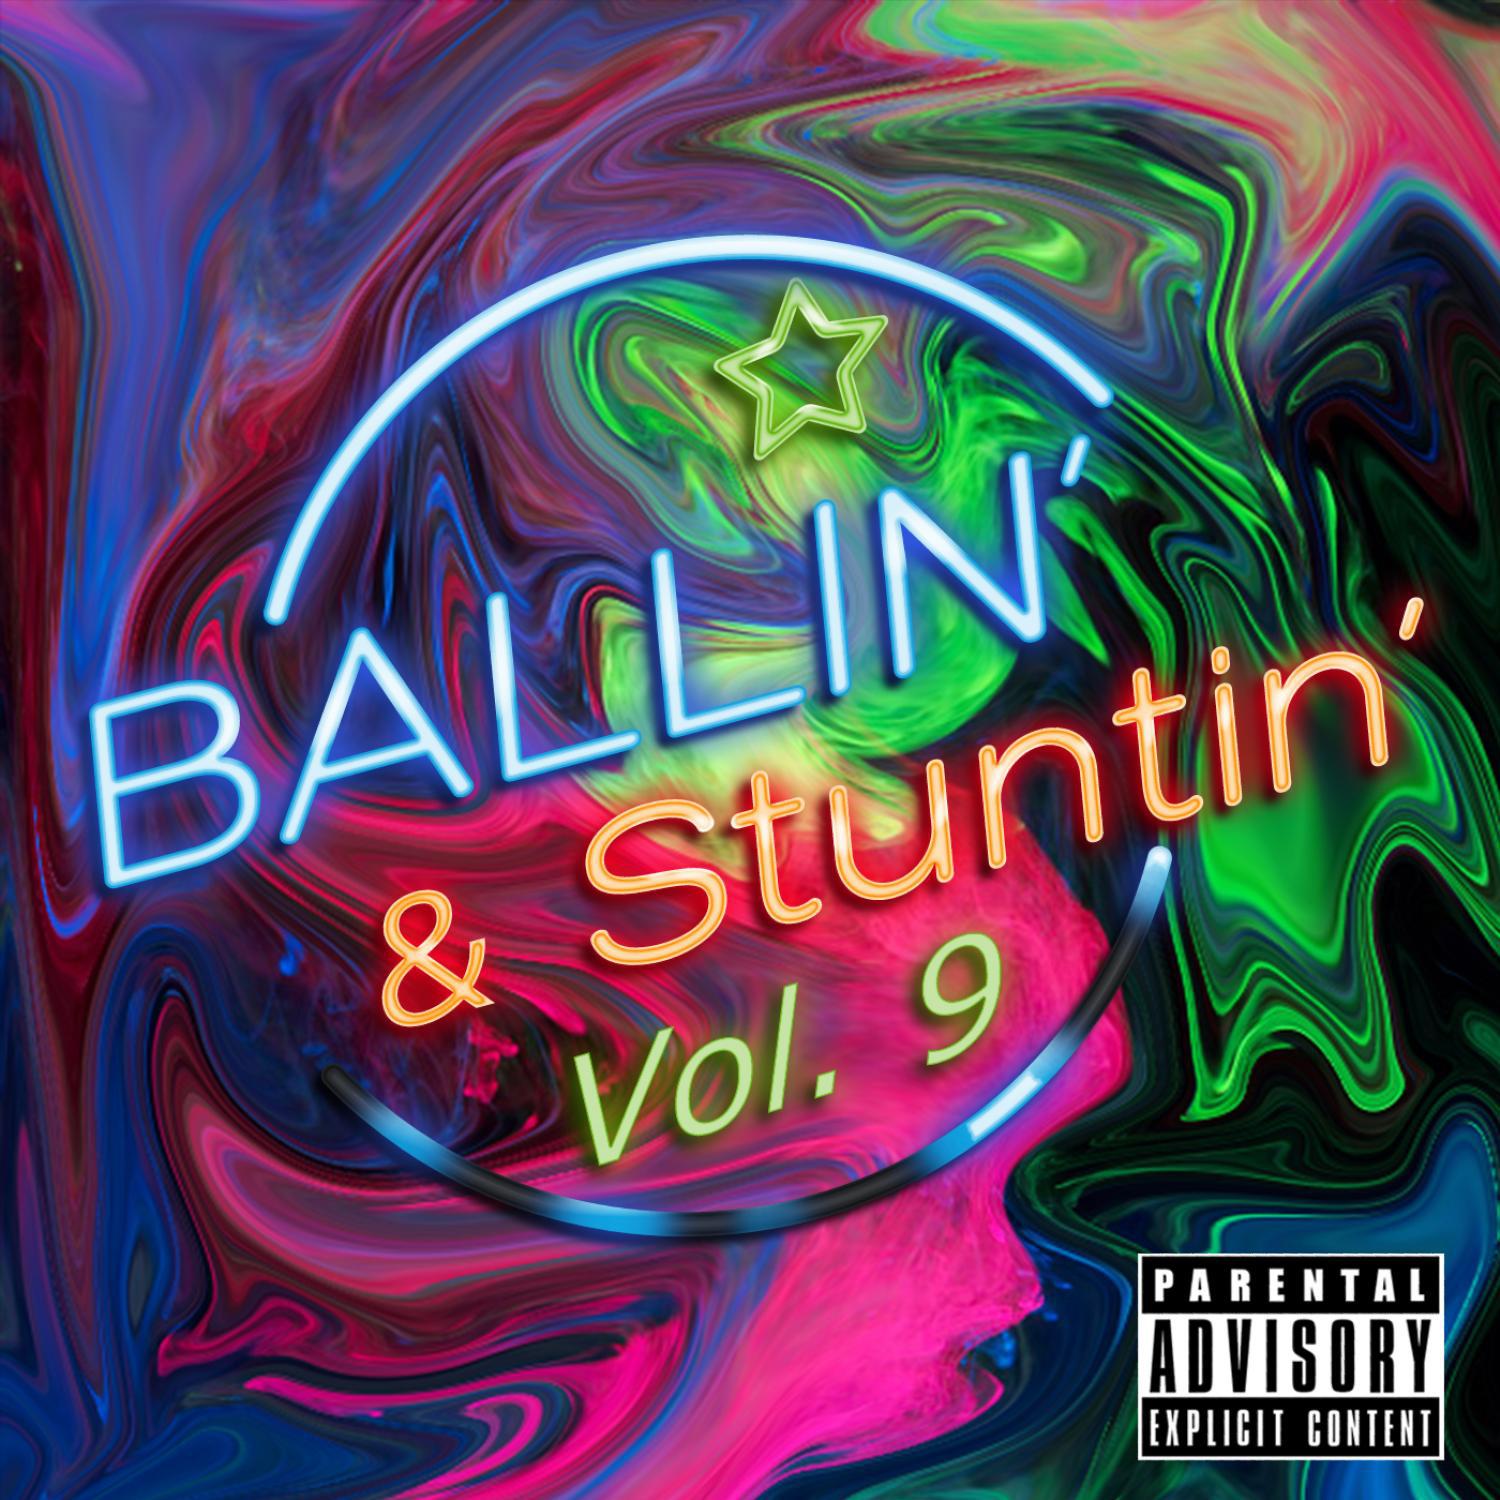 Ballin' & Stuntin' Vol. 9